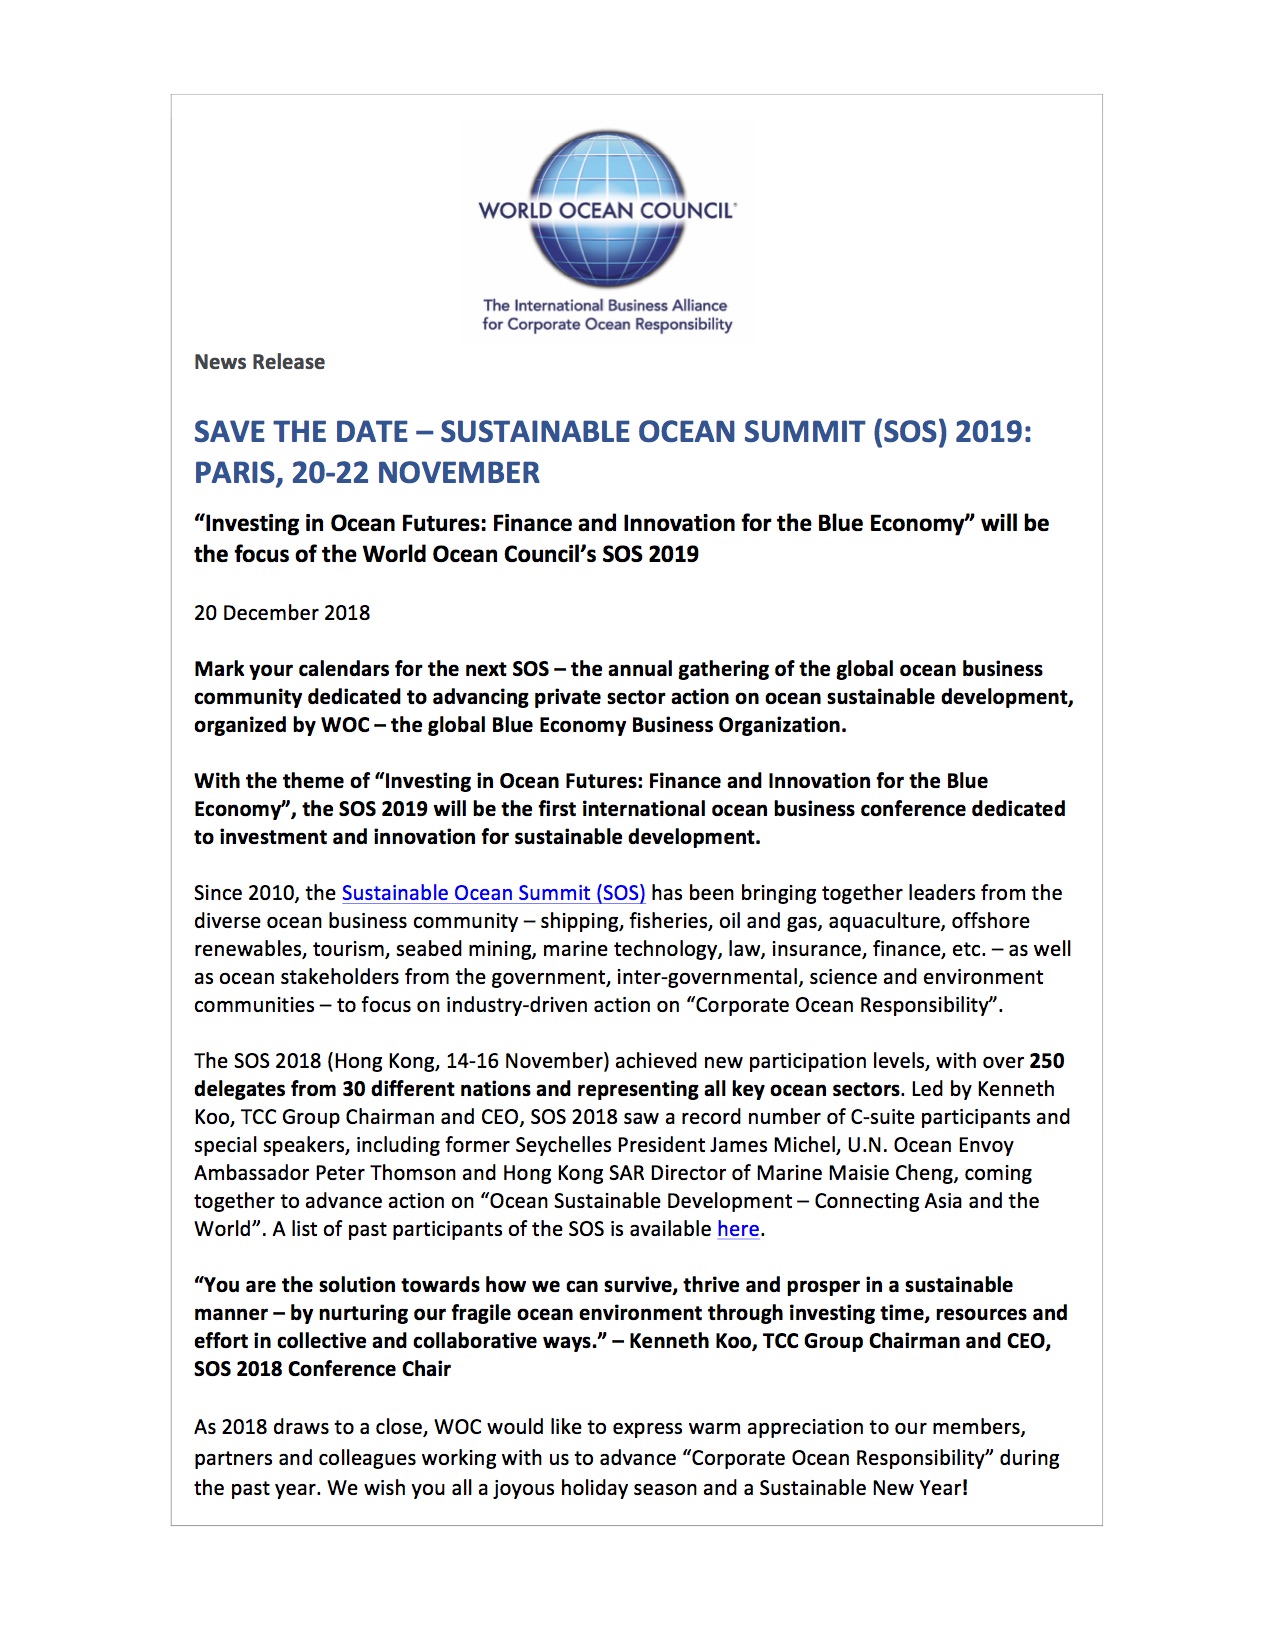 Save the Date - Sustainable Ocean Summit (SOS) 2019: Paris, 20-22 November - 20 December 2018